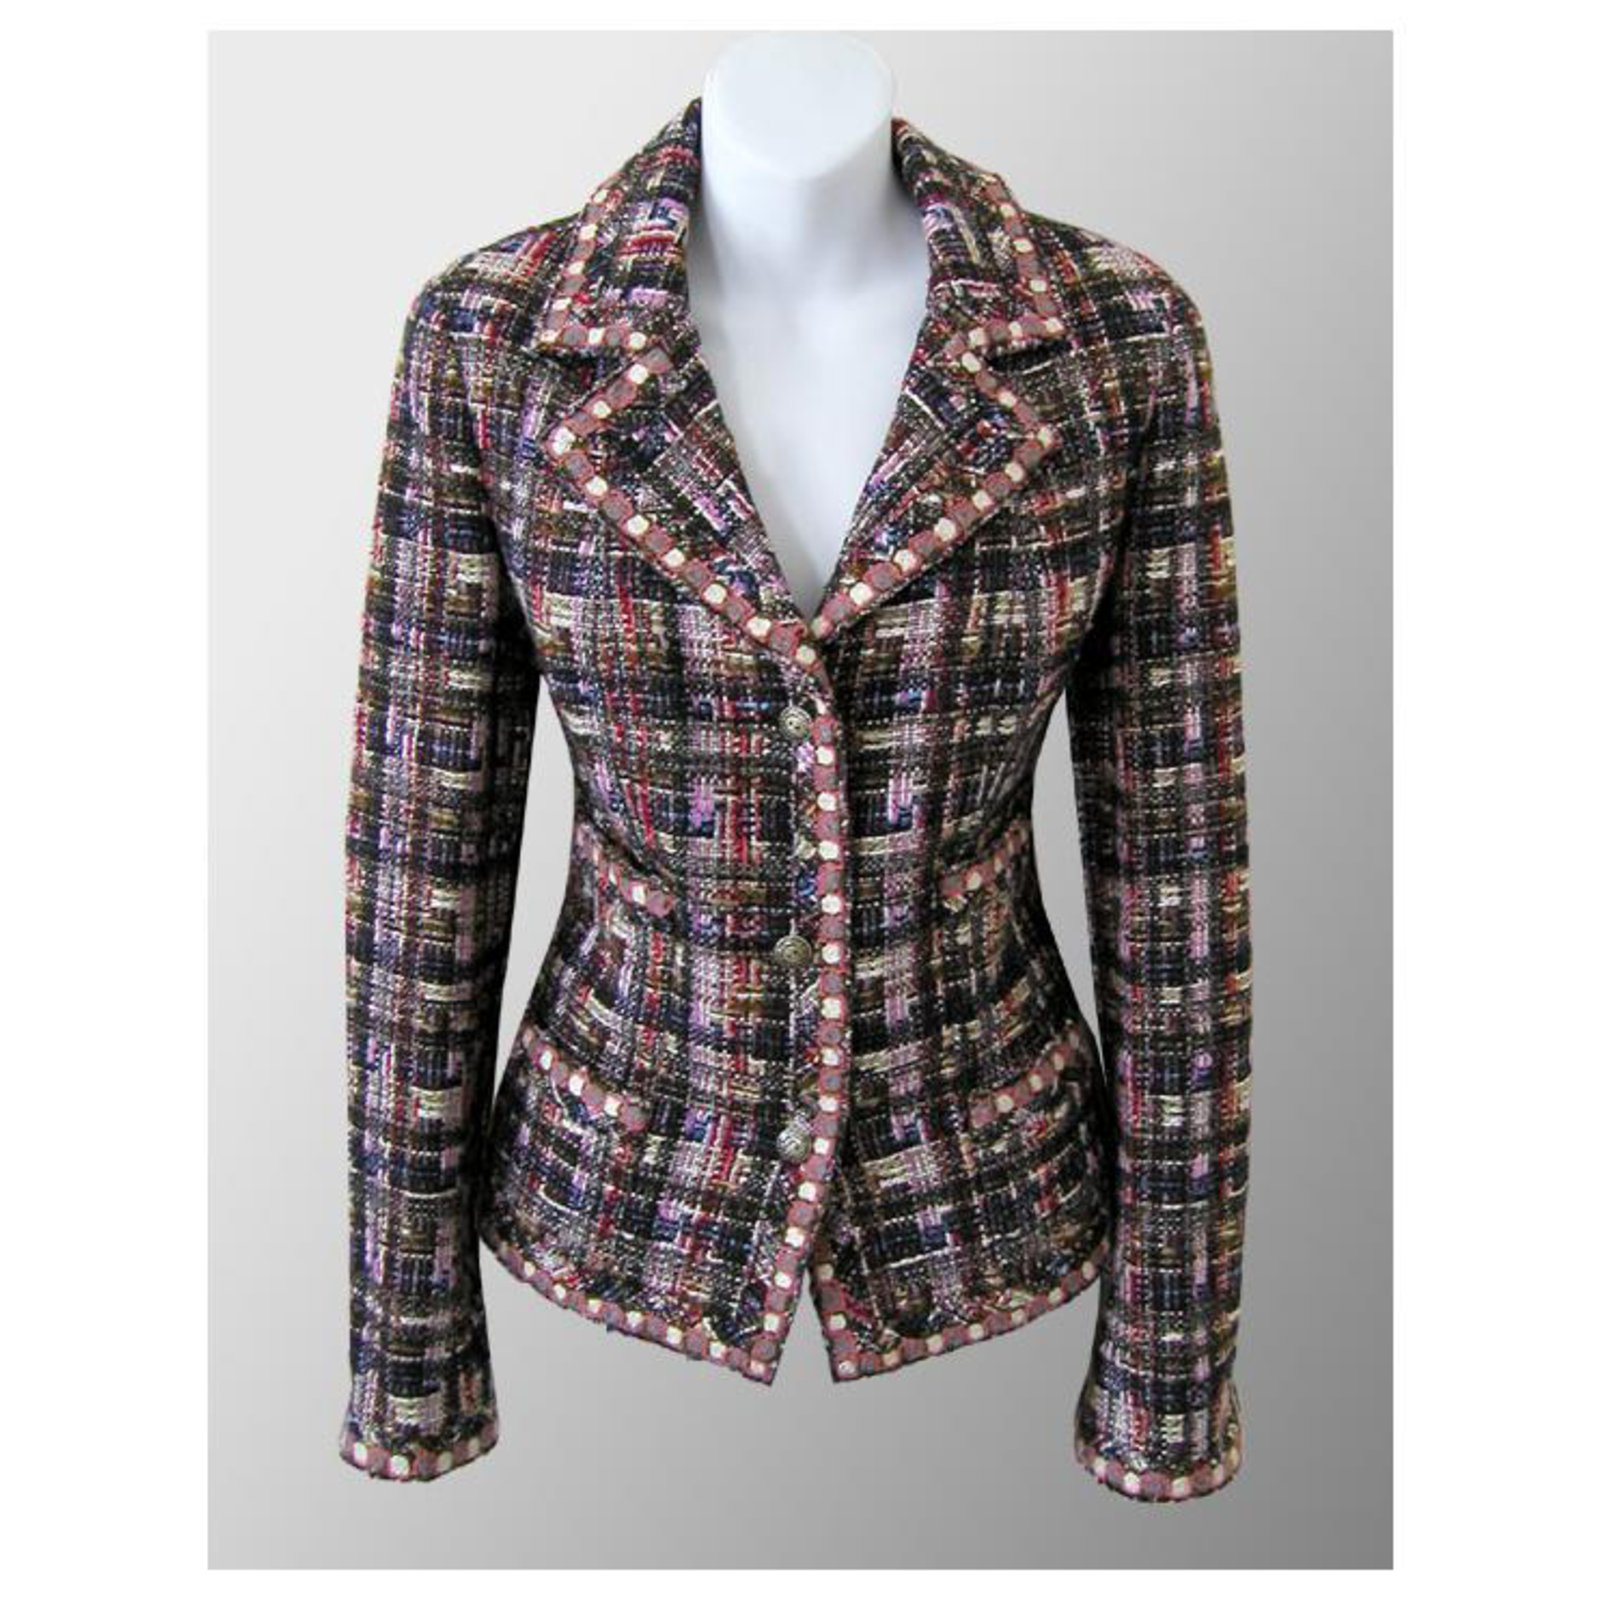 RARE tweed jacket with brooch